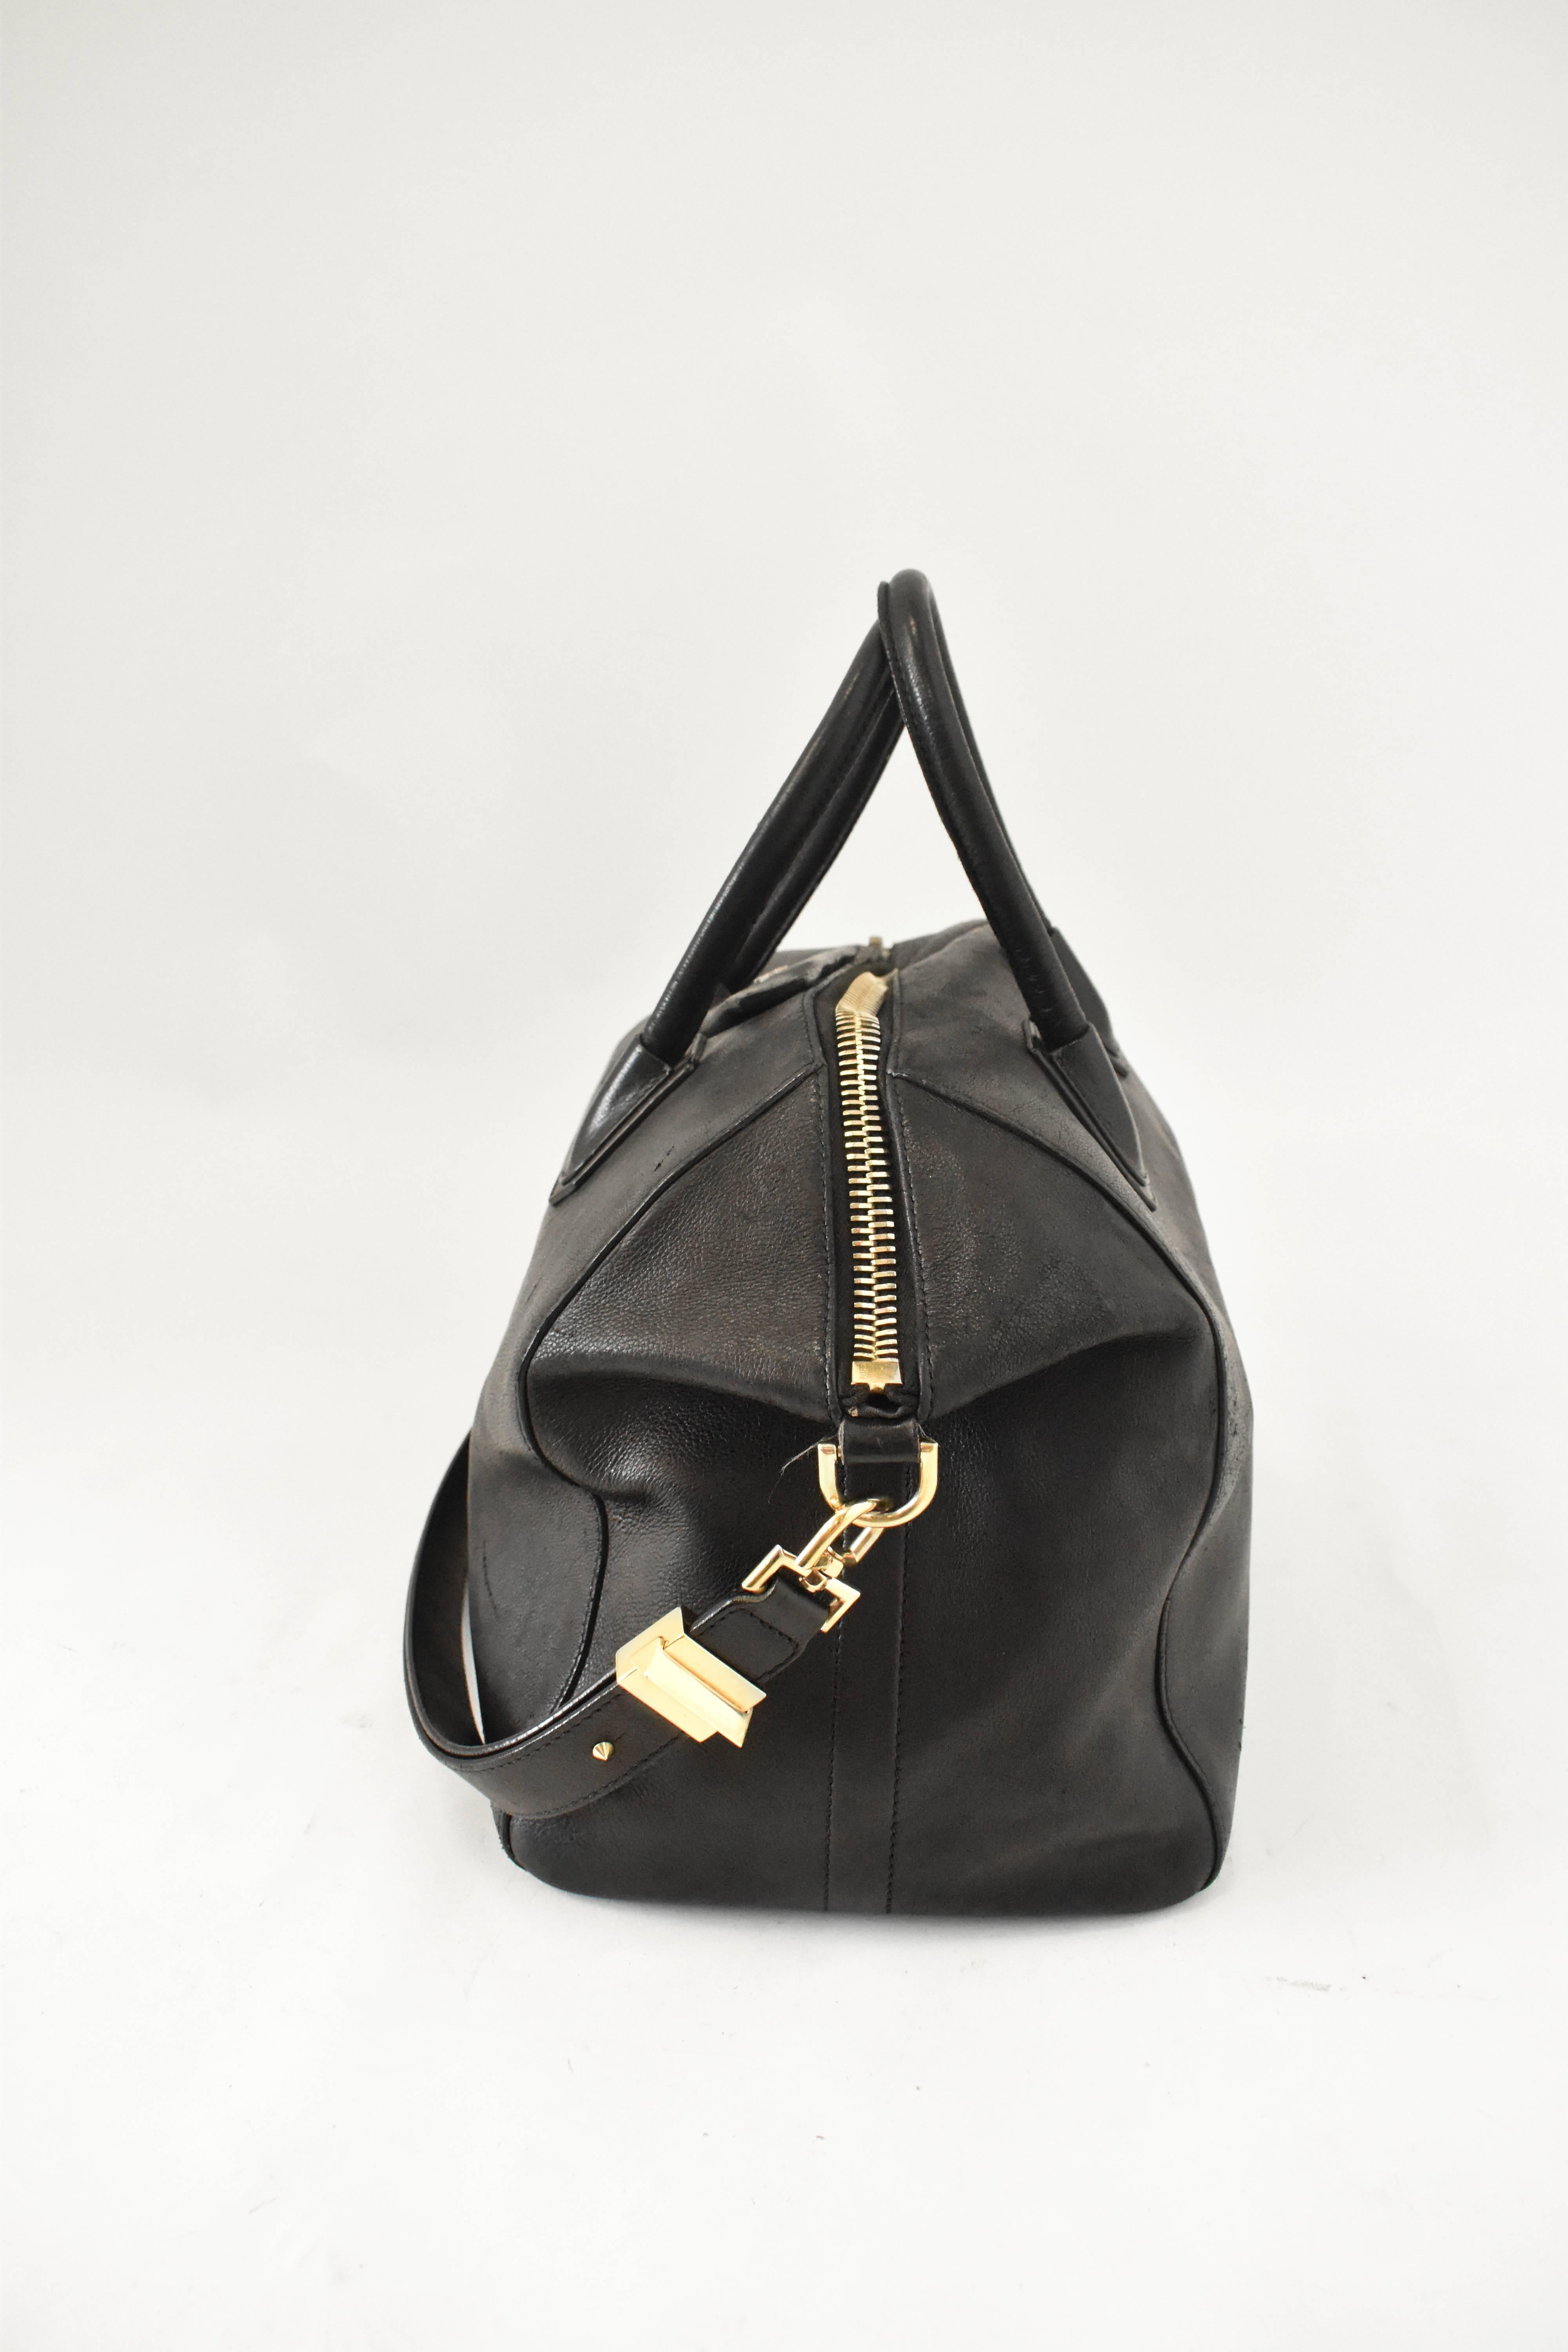 Givenchy Antigona Black Leather Handbag In Good Condition In London, GB